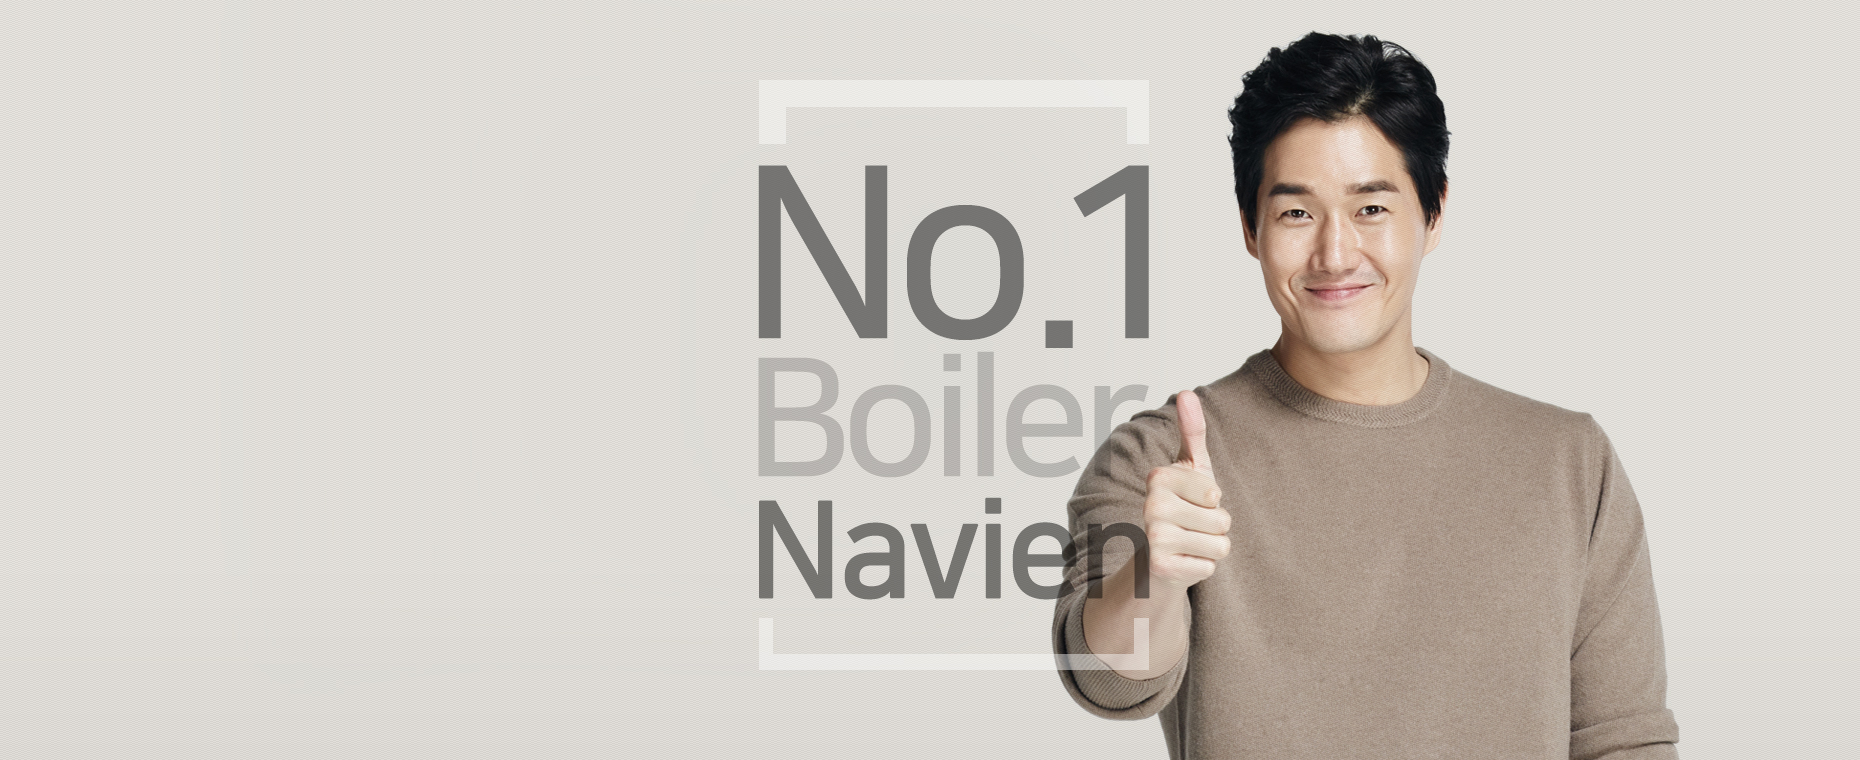 Korea’s most reputable boiler manufacturer, KD Navien